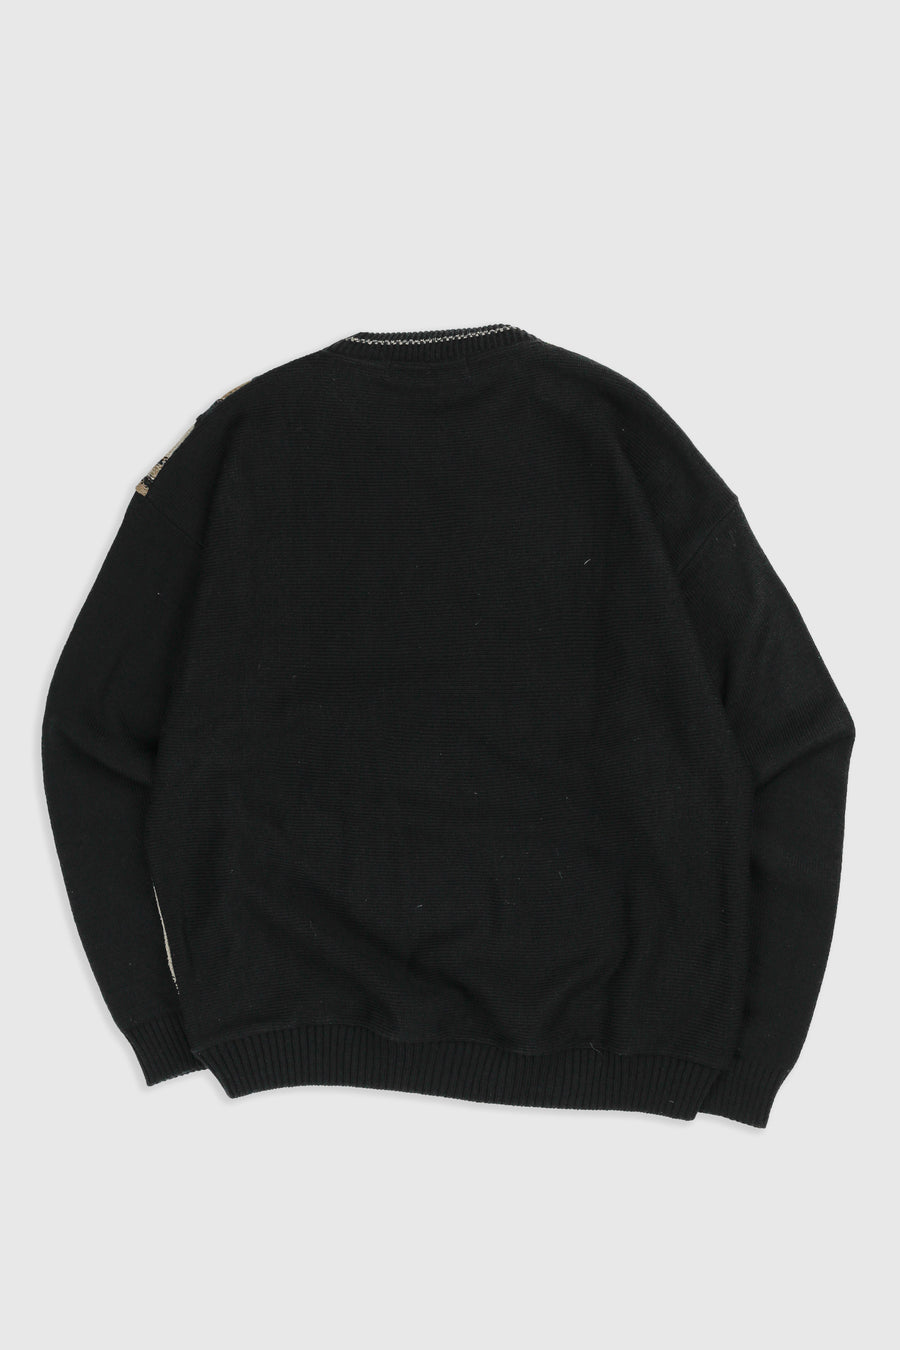 Vintage Knit Sweatshirt - XL